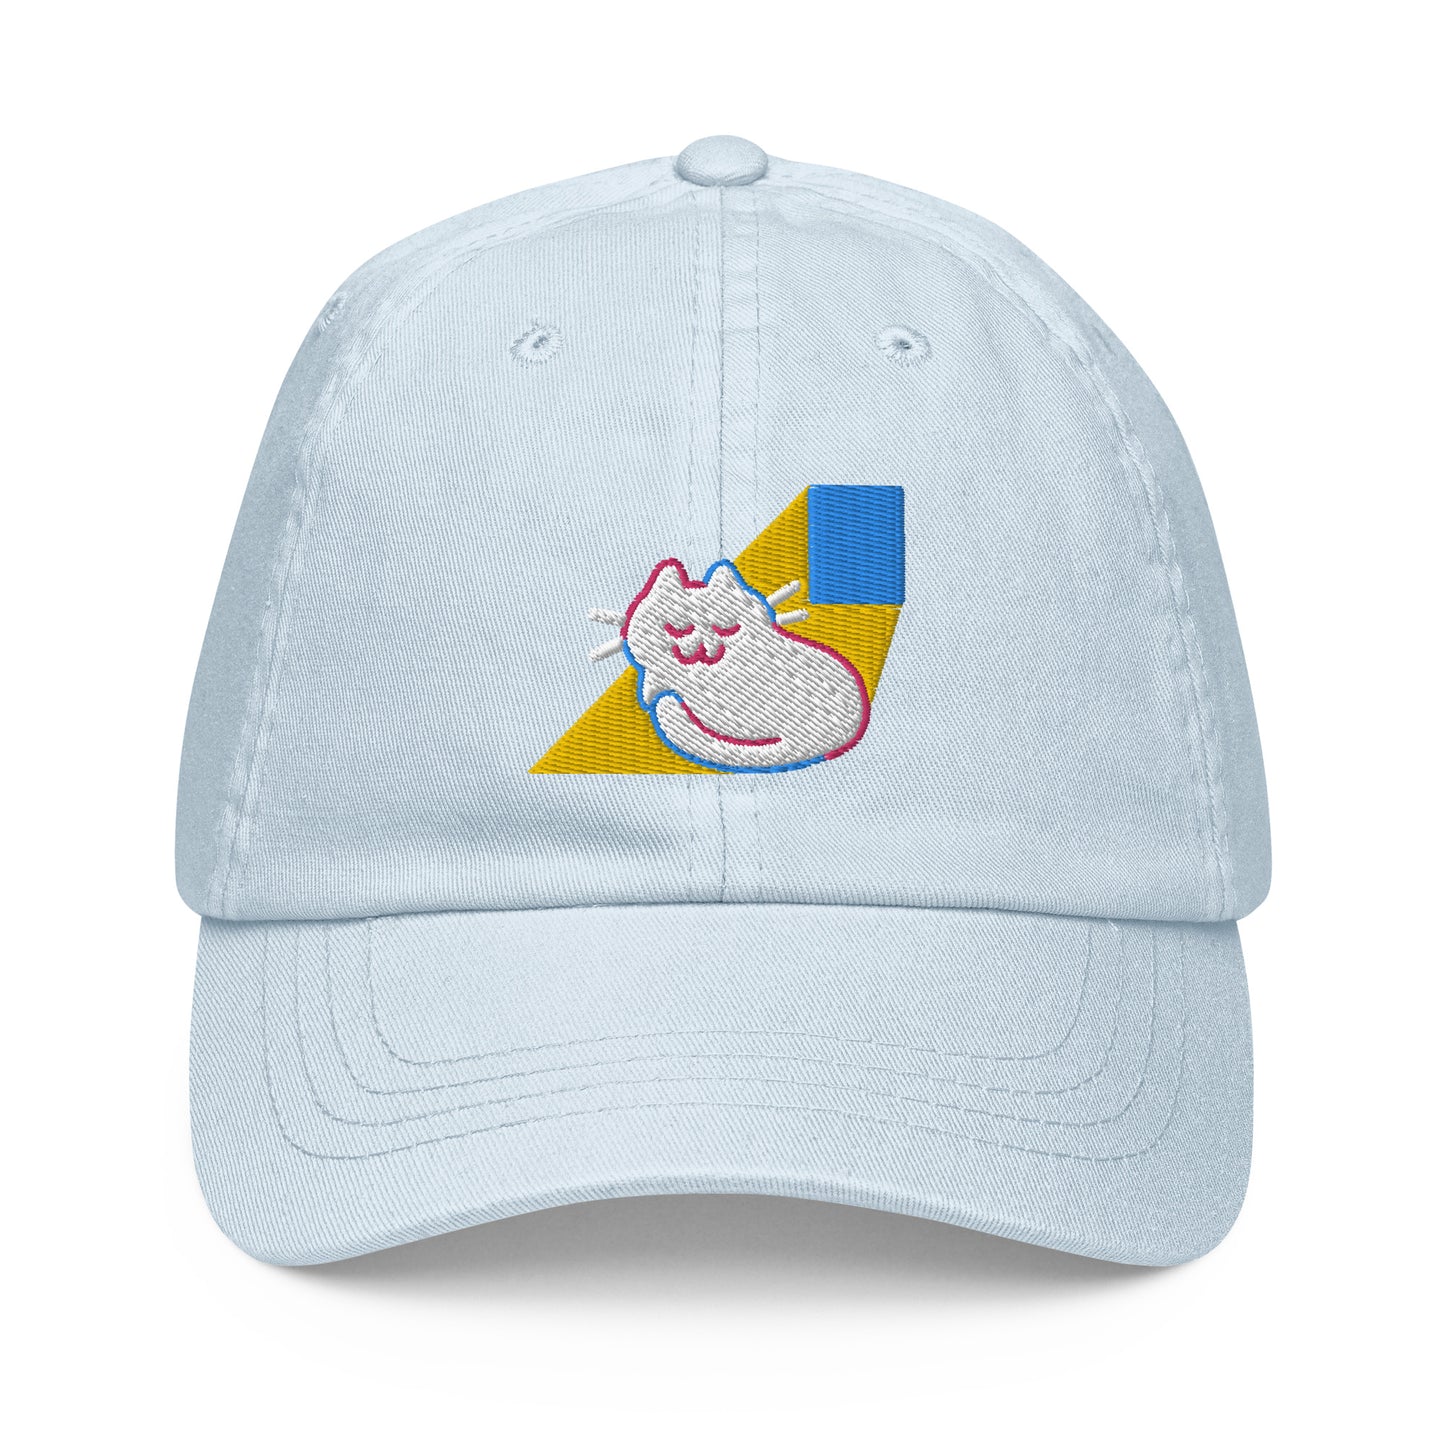 Kitty Caught in a Sunbeam Pastel baseball hat